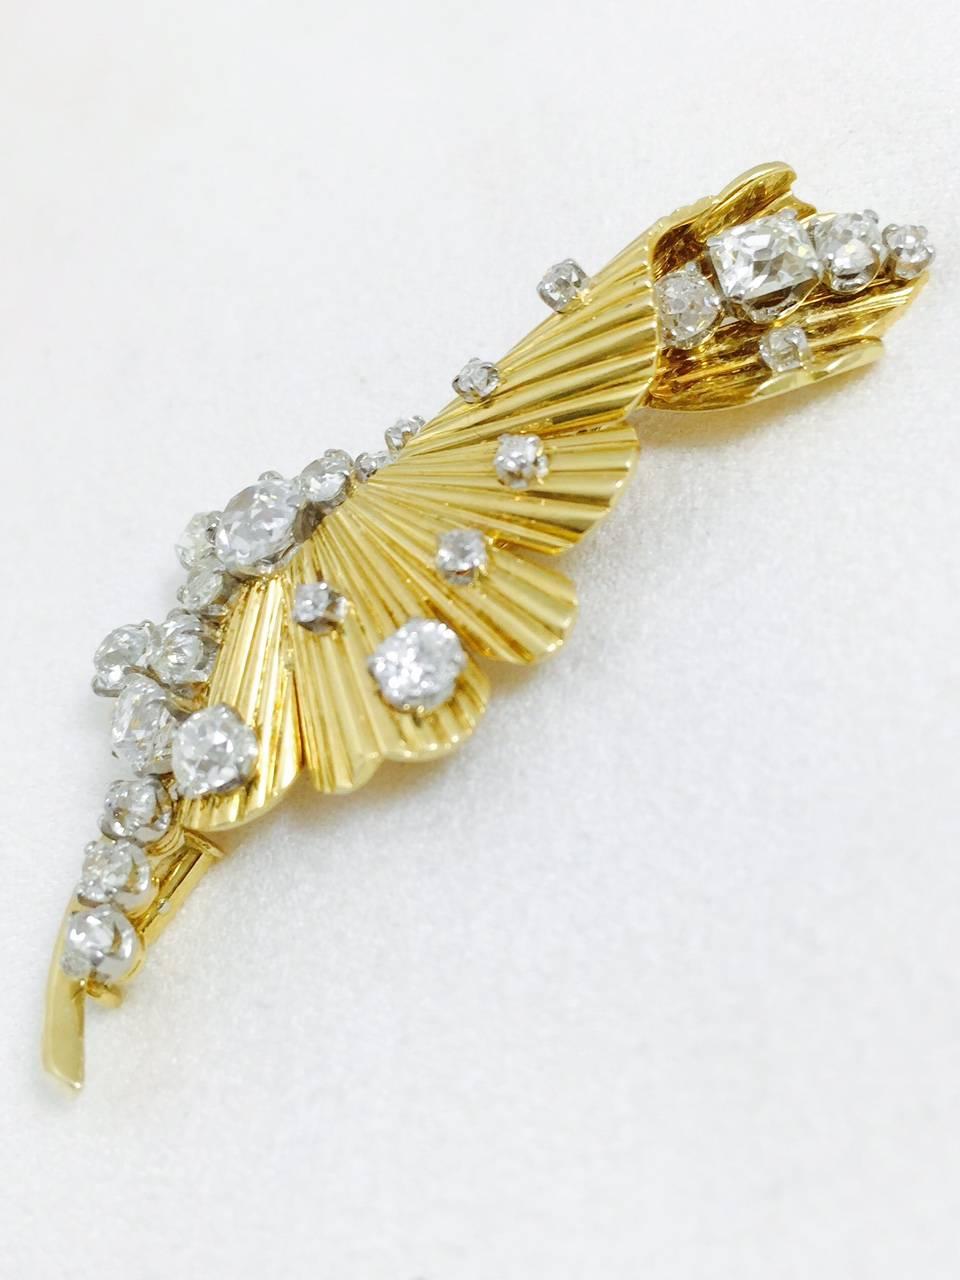 Contemporary 1970s 18 Karat European Cut Diamond Gold Flower Brooch For Sale